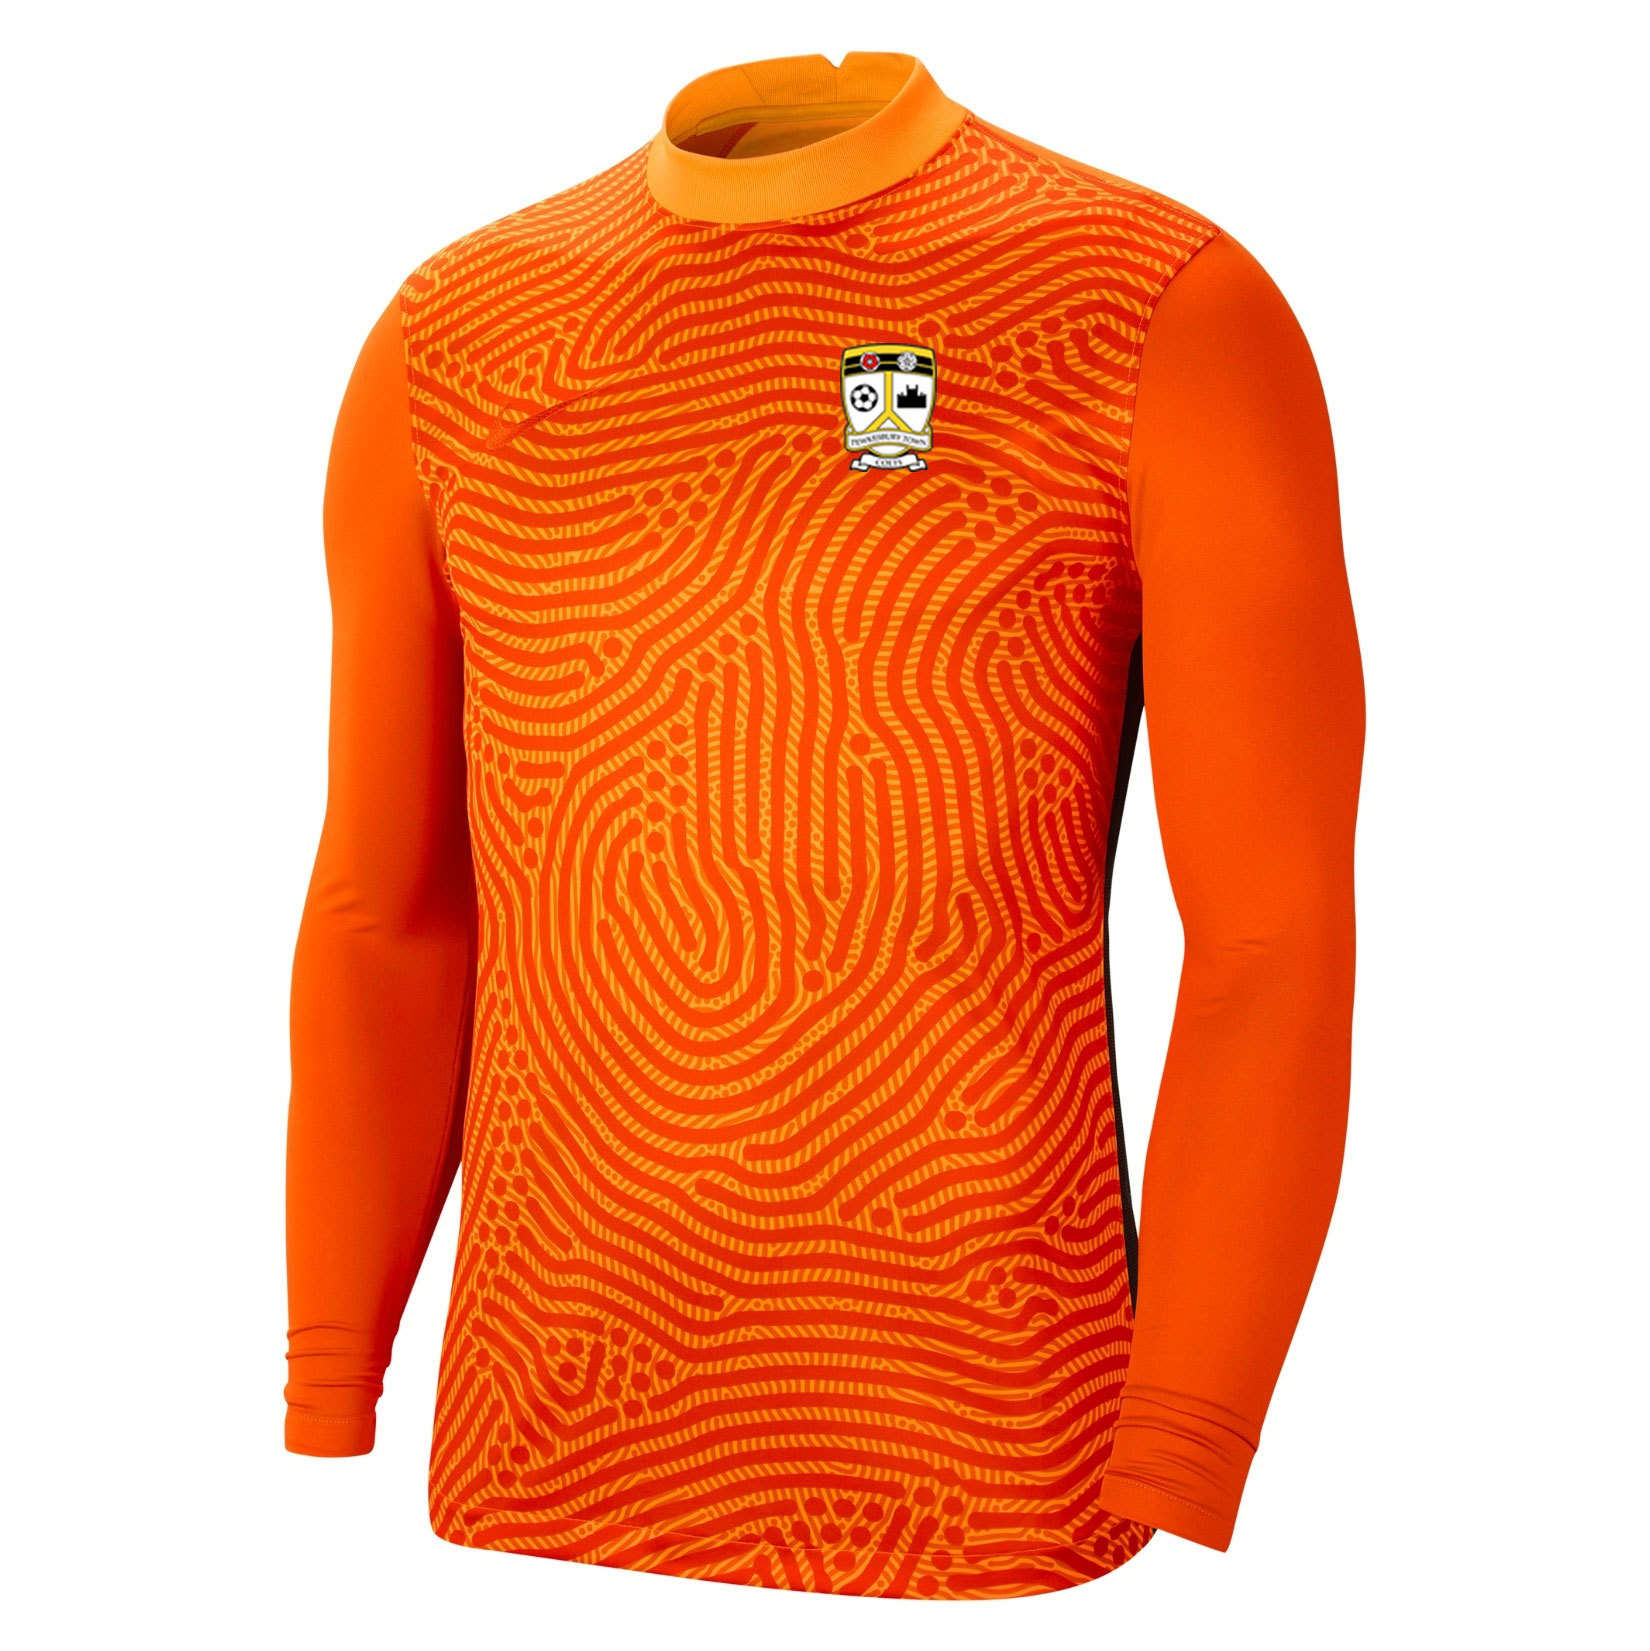 Nike Gardien III Goalkeeper Long Shirt Shirt Total Orange-Brilliant Ornge-Team Orange